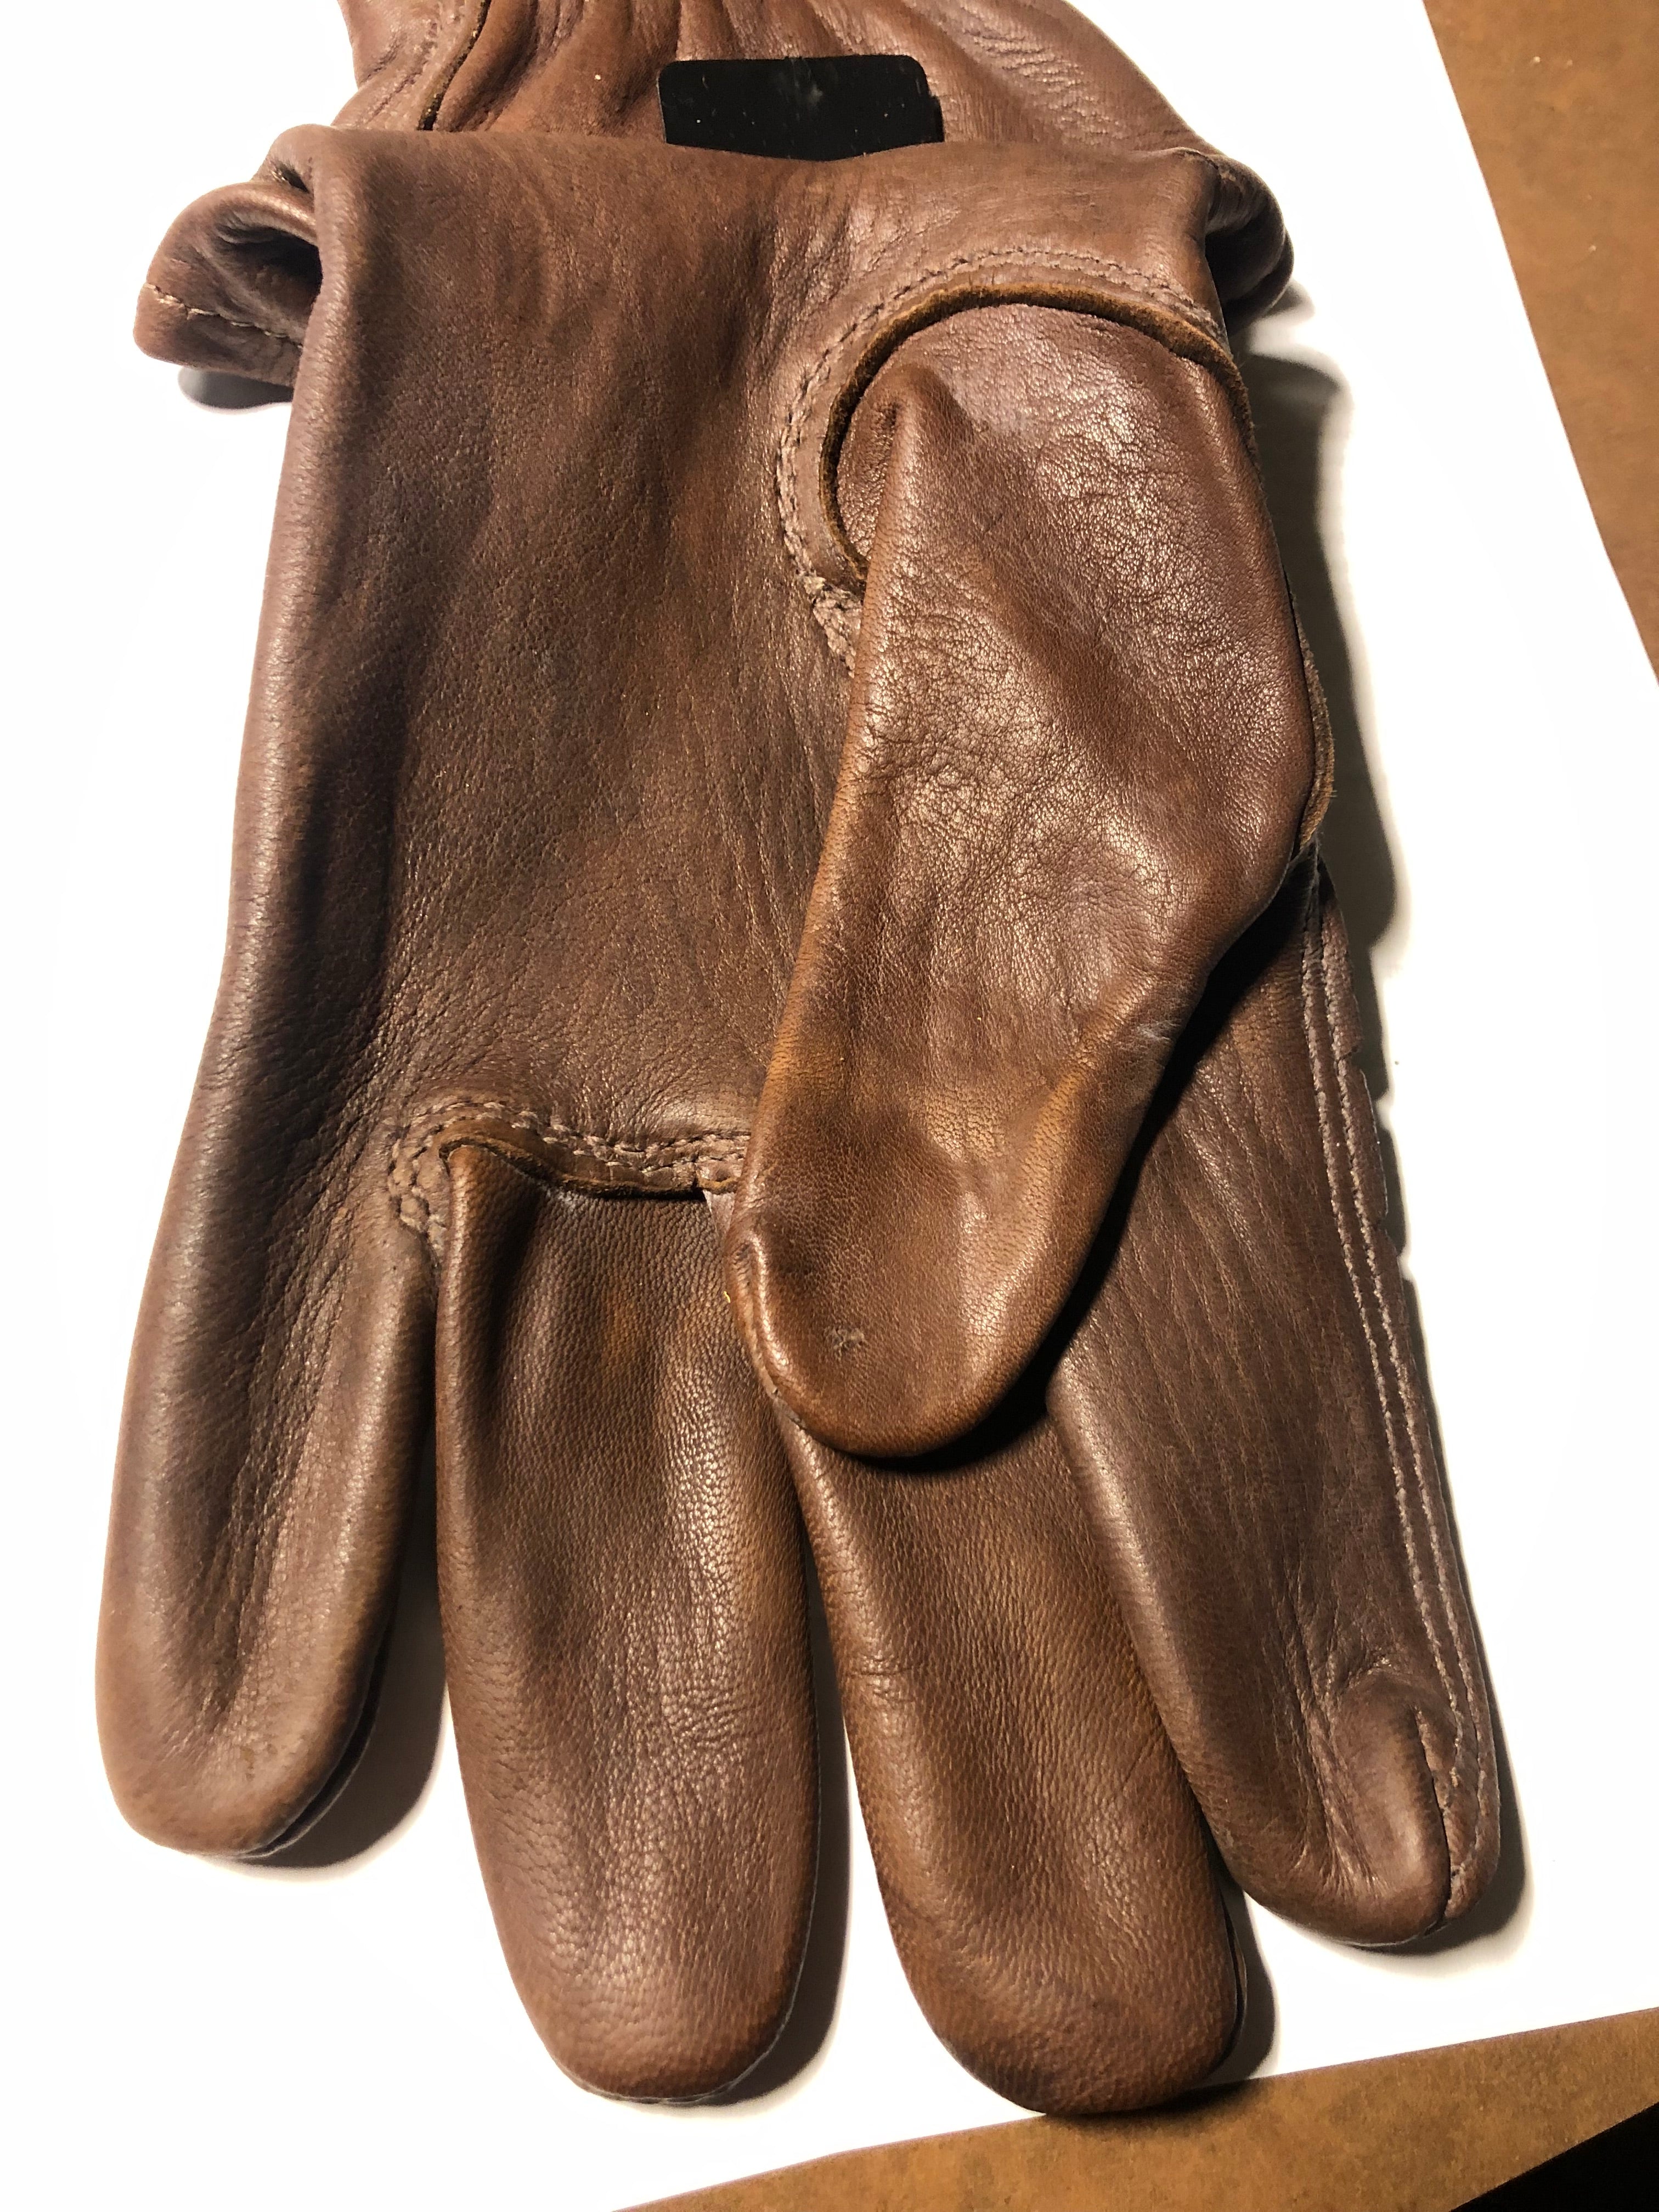 Midwest Glove = Buckskin "Keystone Thumb" leather gloves